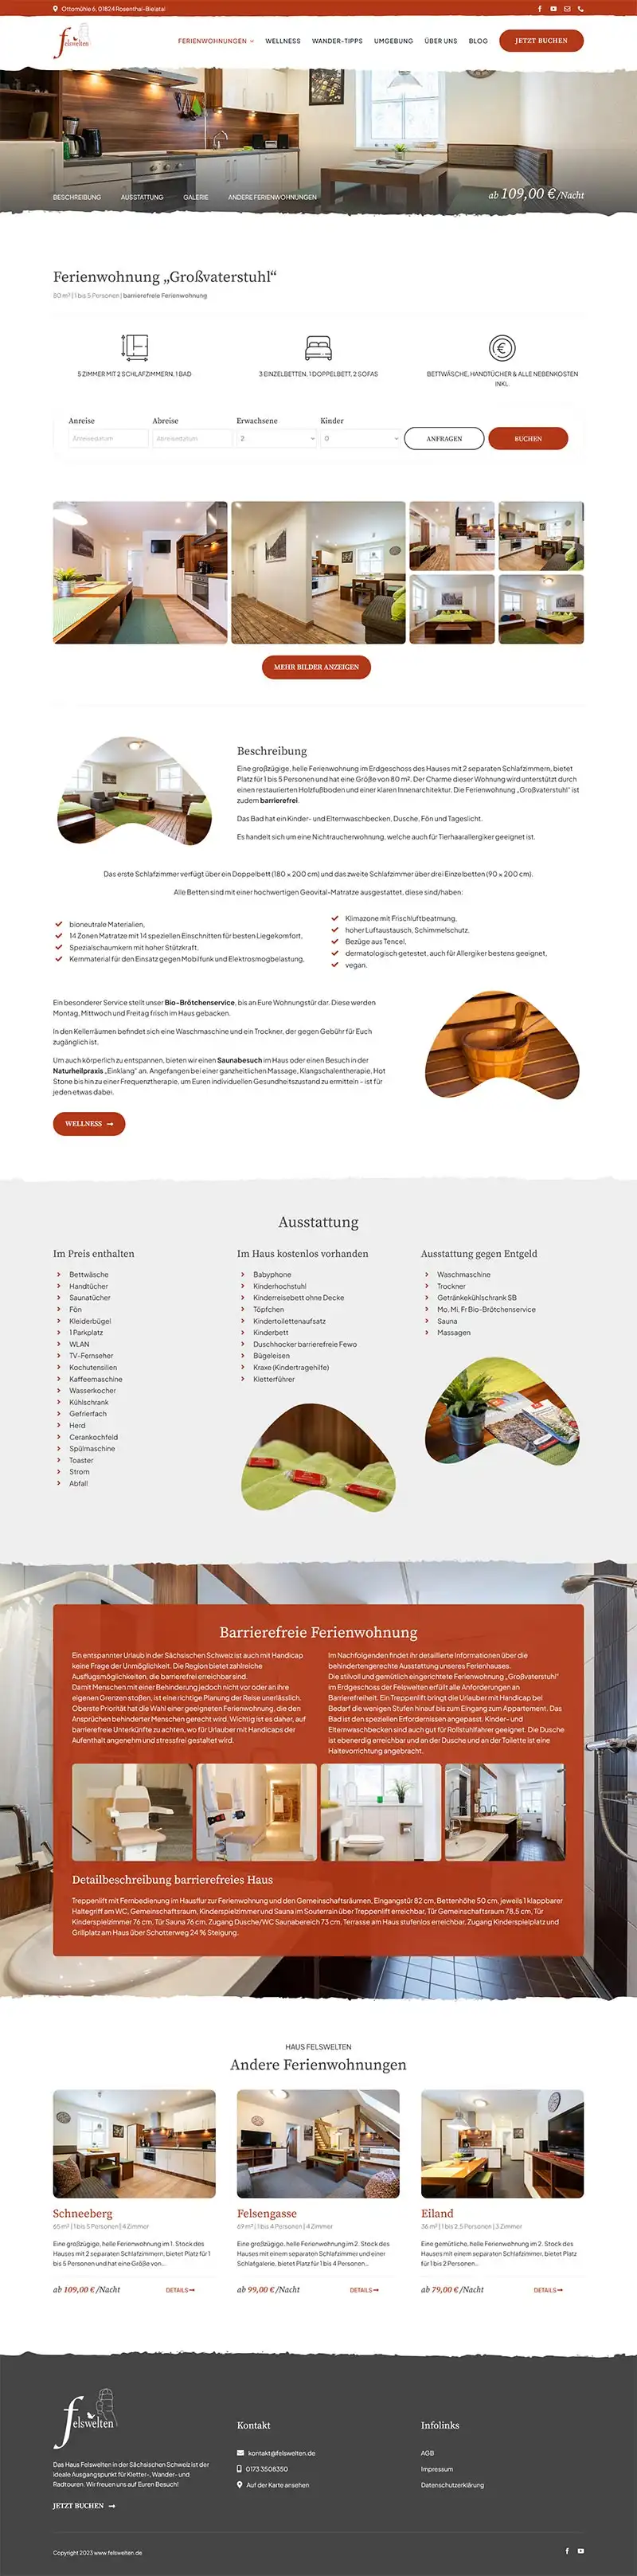 Ferienhaus Felswelten - Screenshot Fullsize Unterseite